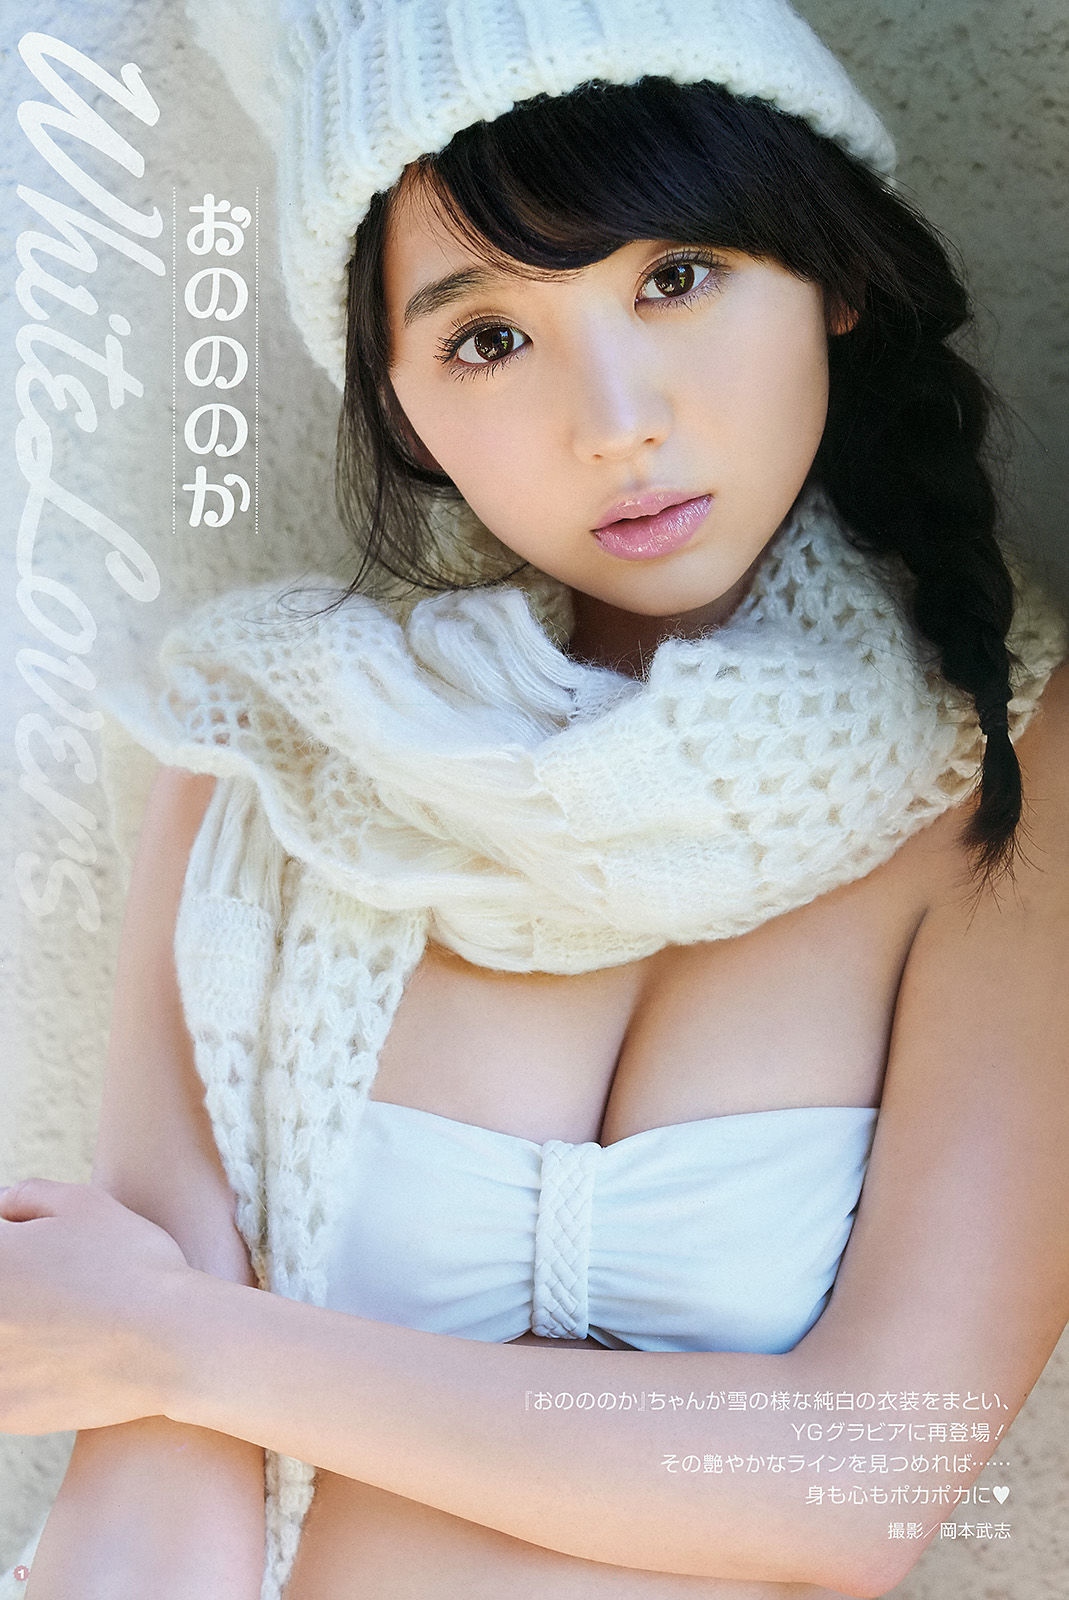 [Young Gangan]美胸日本萌妹子:小野乃乃香高品质写真作品个人分享(15P)